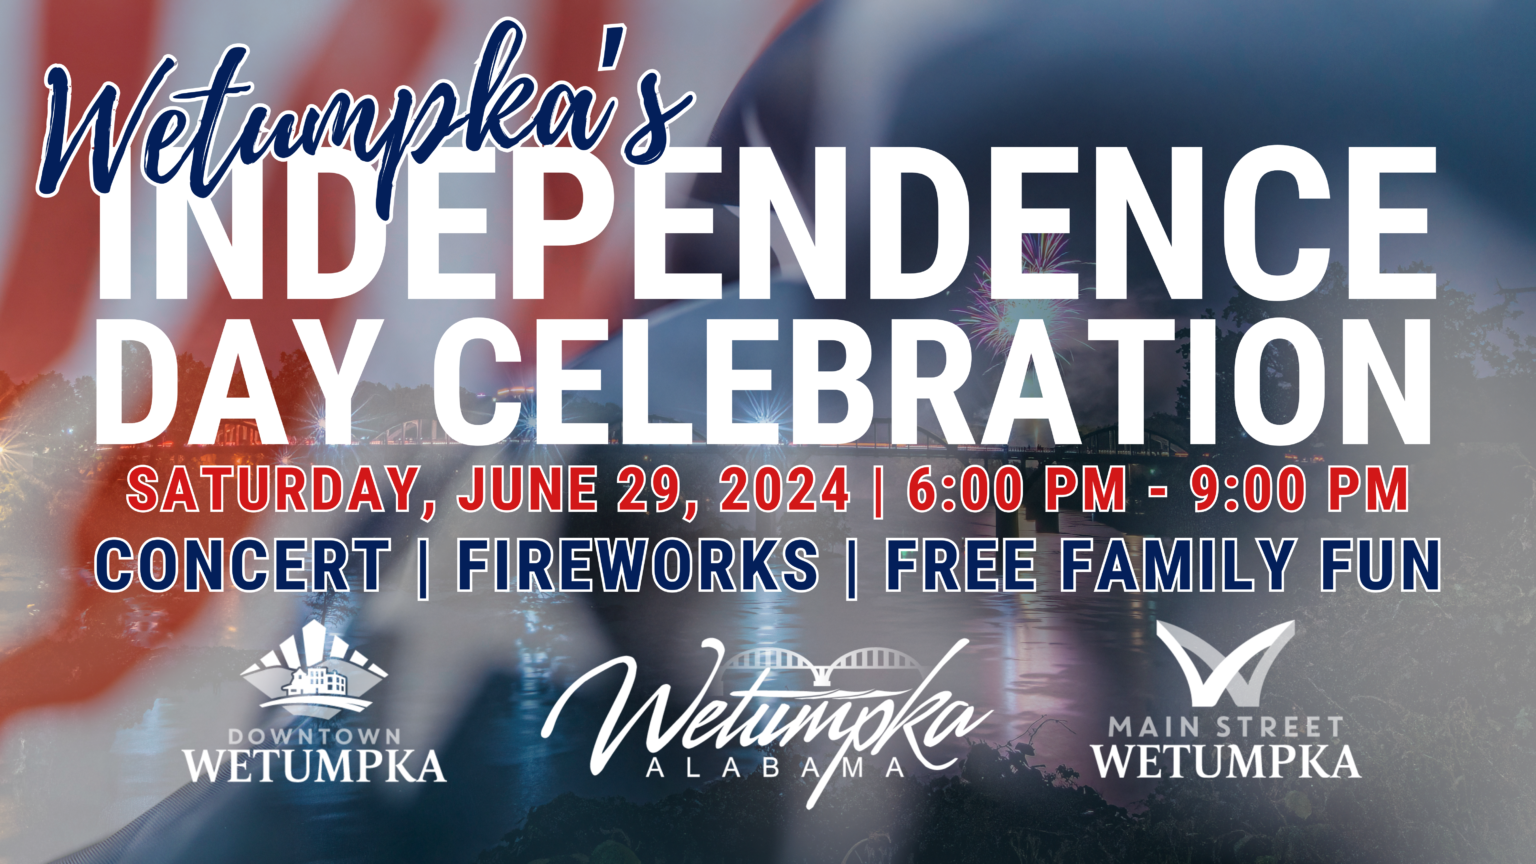 Wetumpka’s Independence Day Celebration